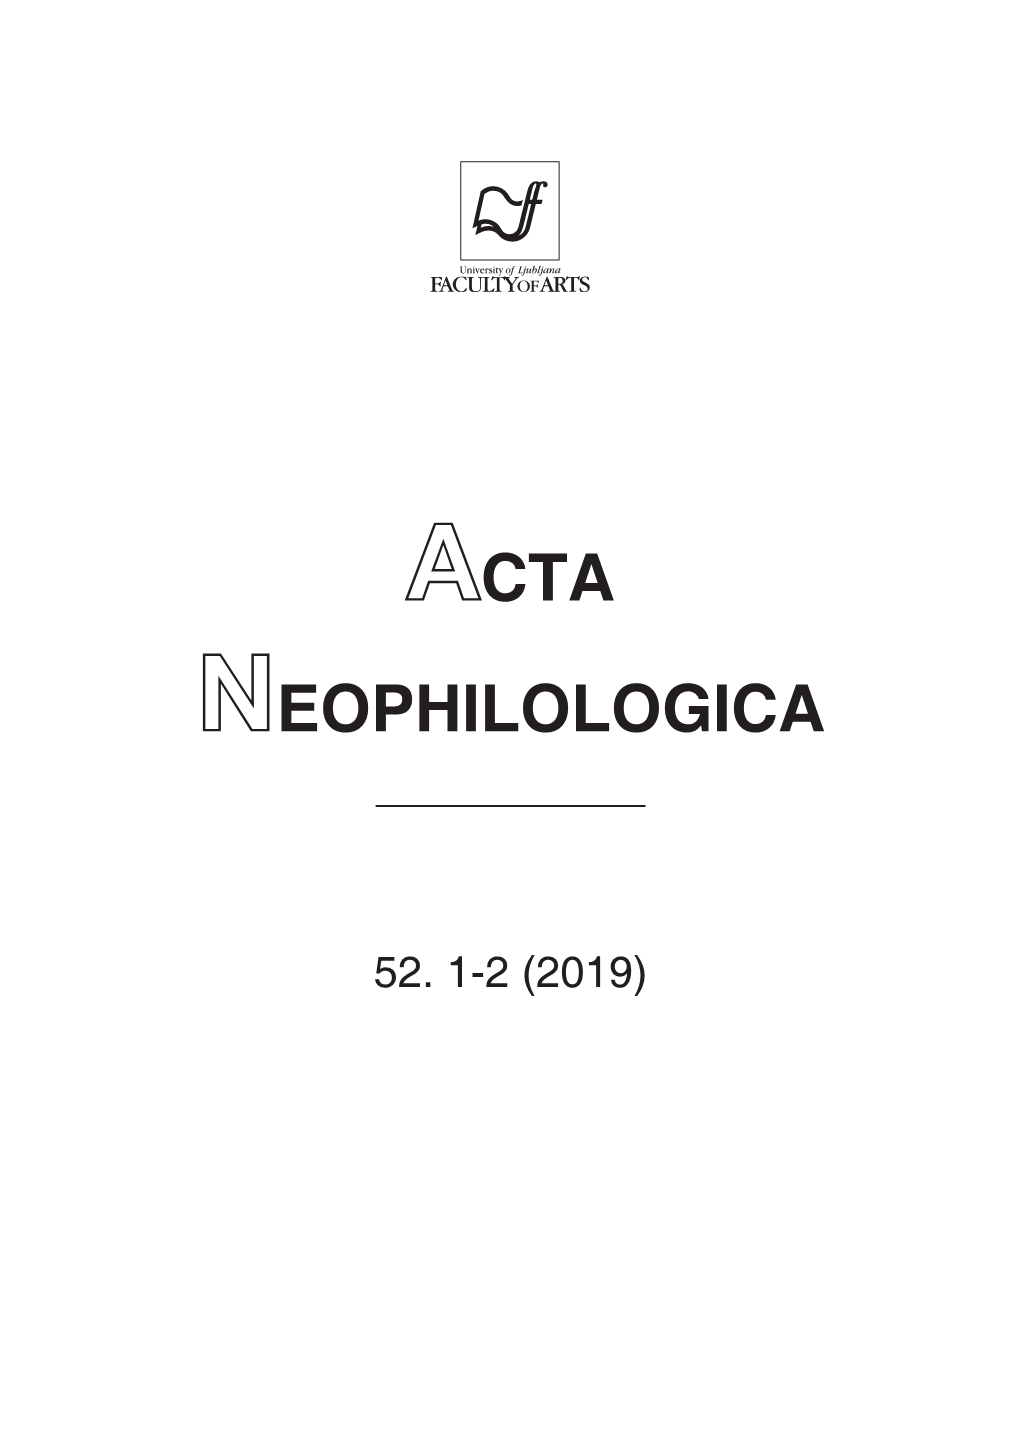 Acta Neophilologica